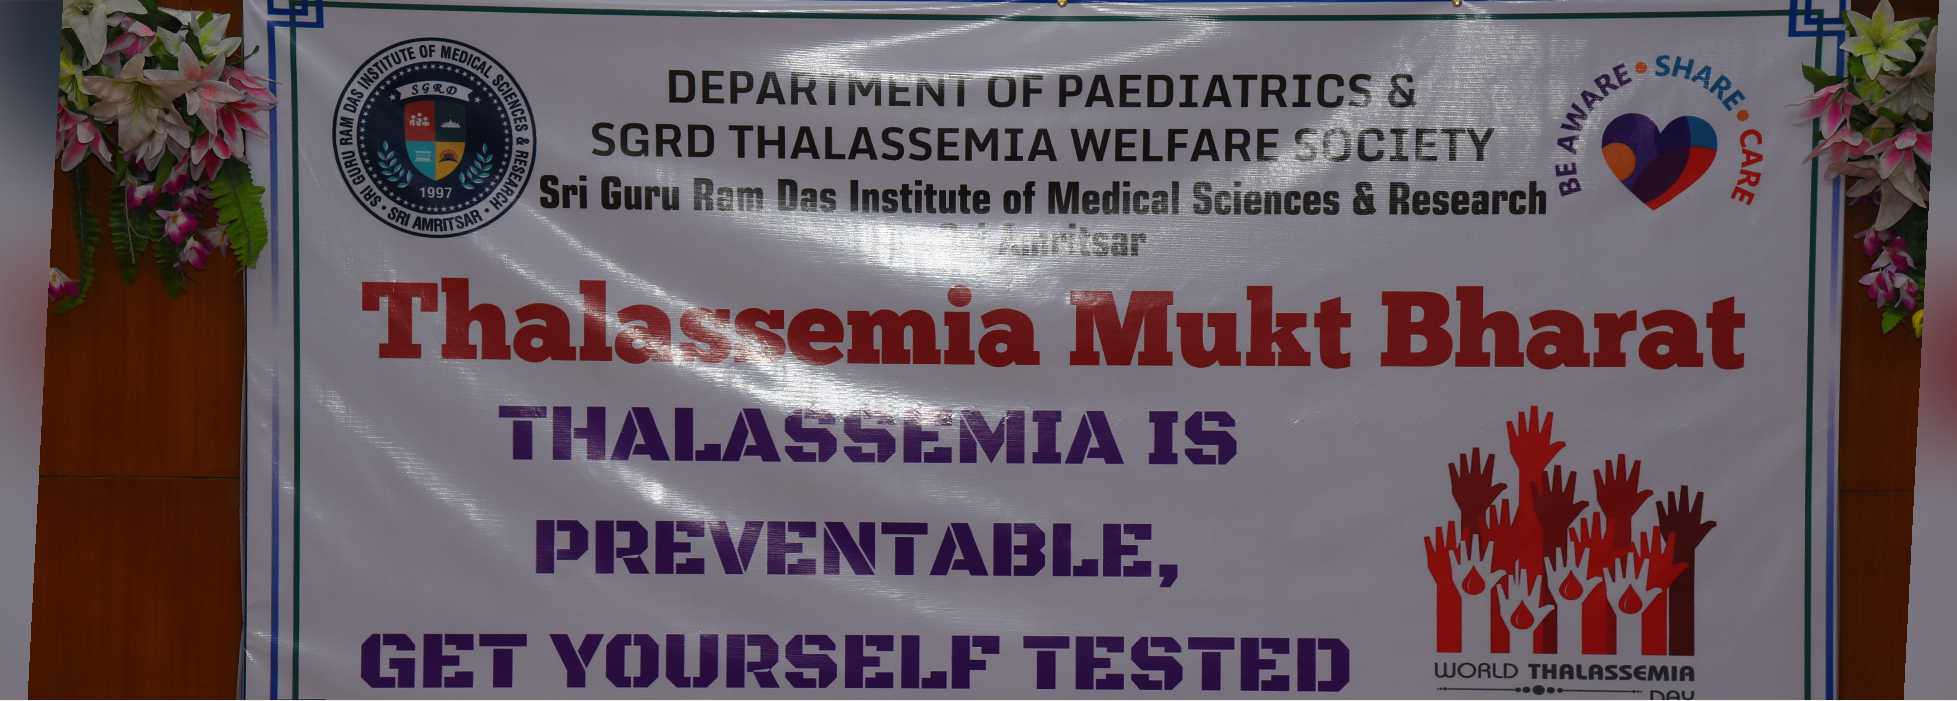 galimgs/Thalassemia Mukt Bharat Program Started/P - 94.jpg